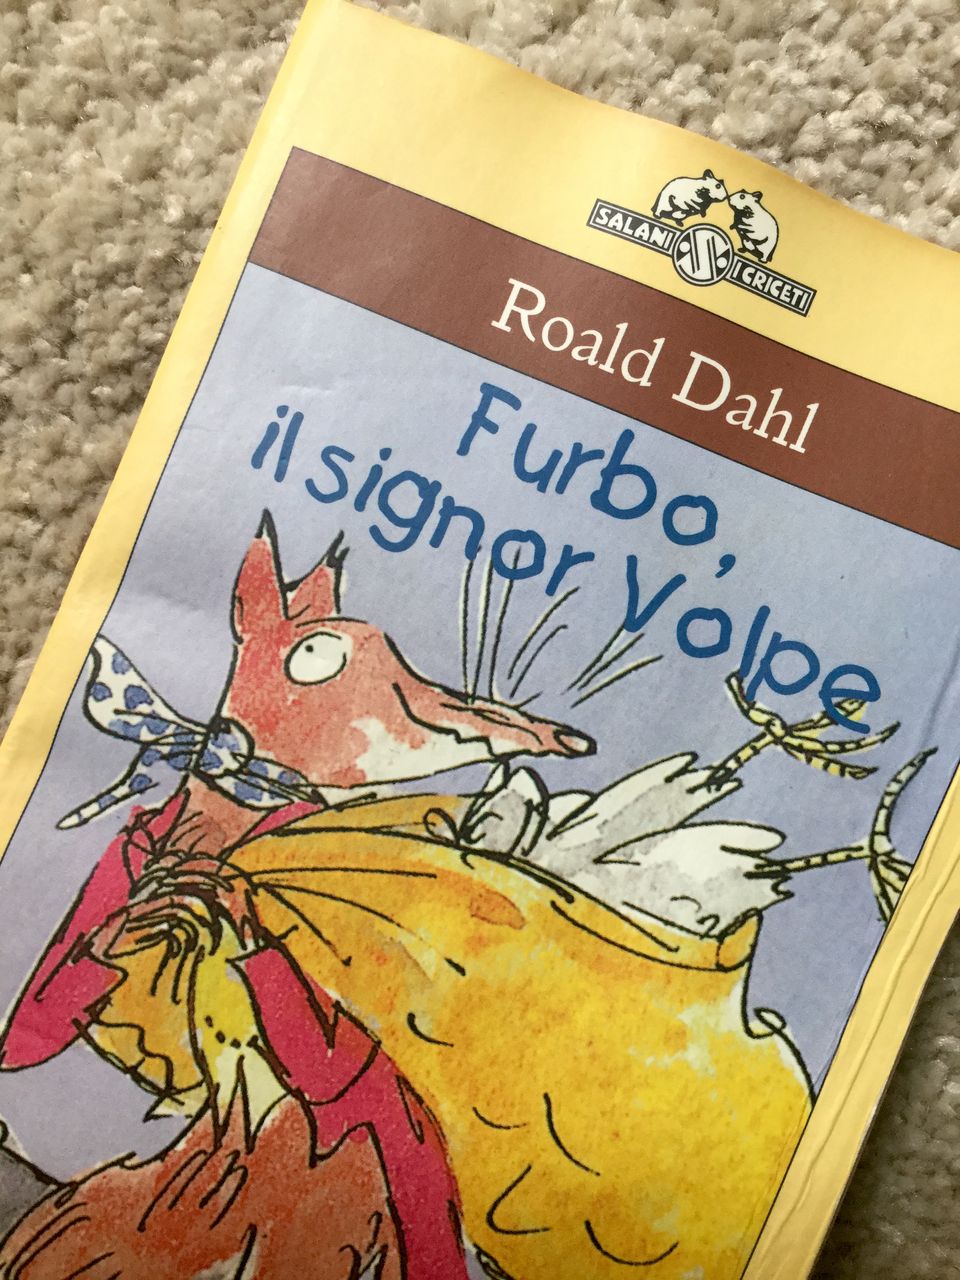 Roald Dahl, Furbo, signor volpe, Salani